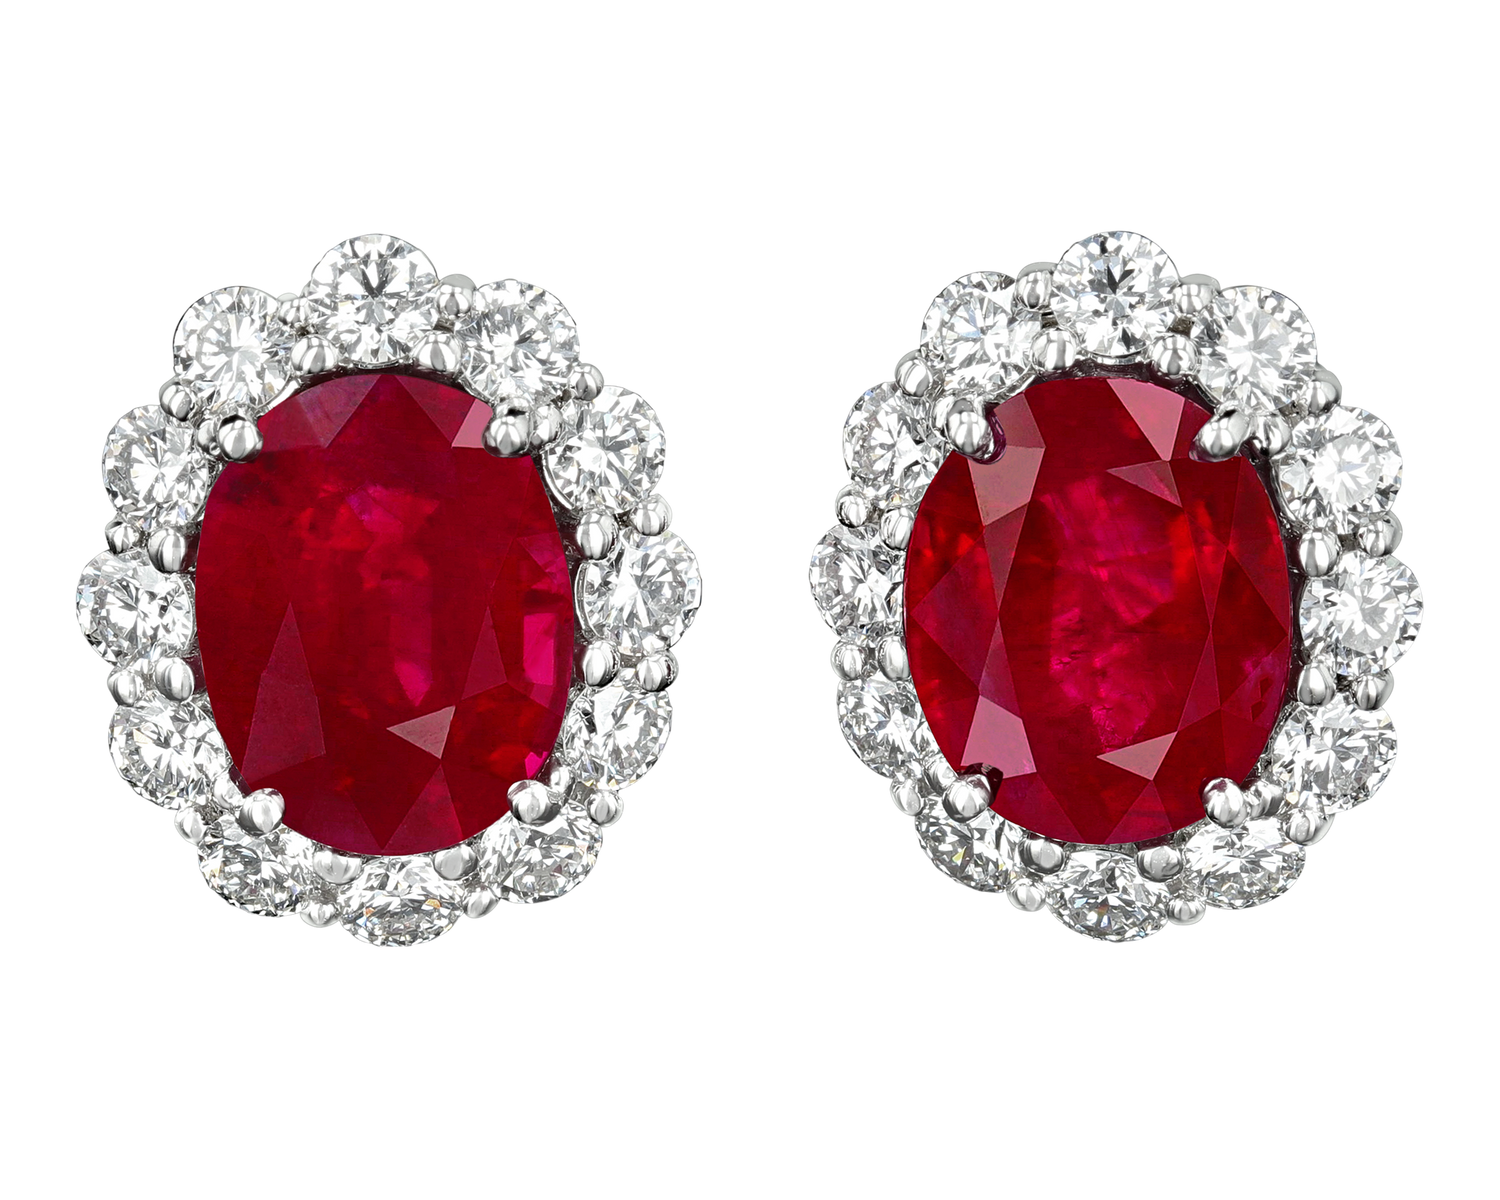 Oval Burma Ruby Earrings, 8.58 Carats